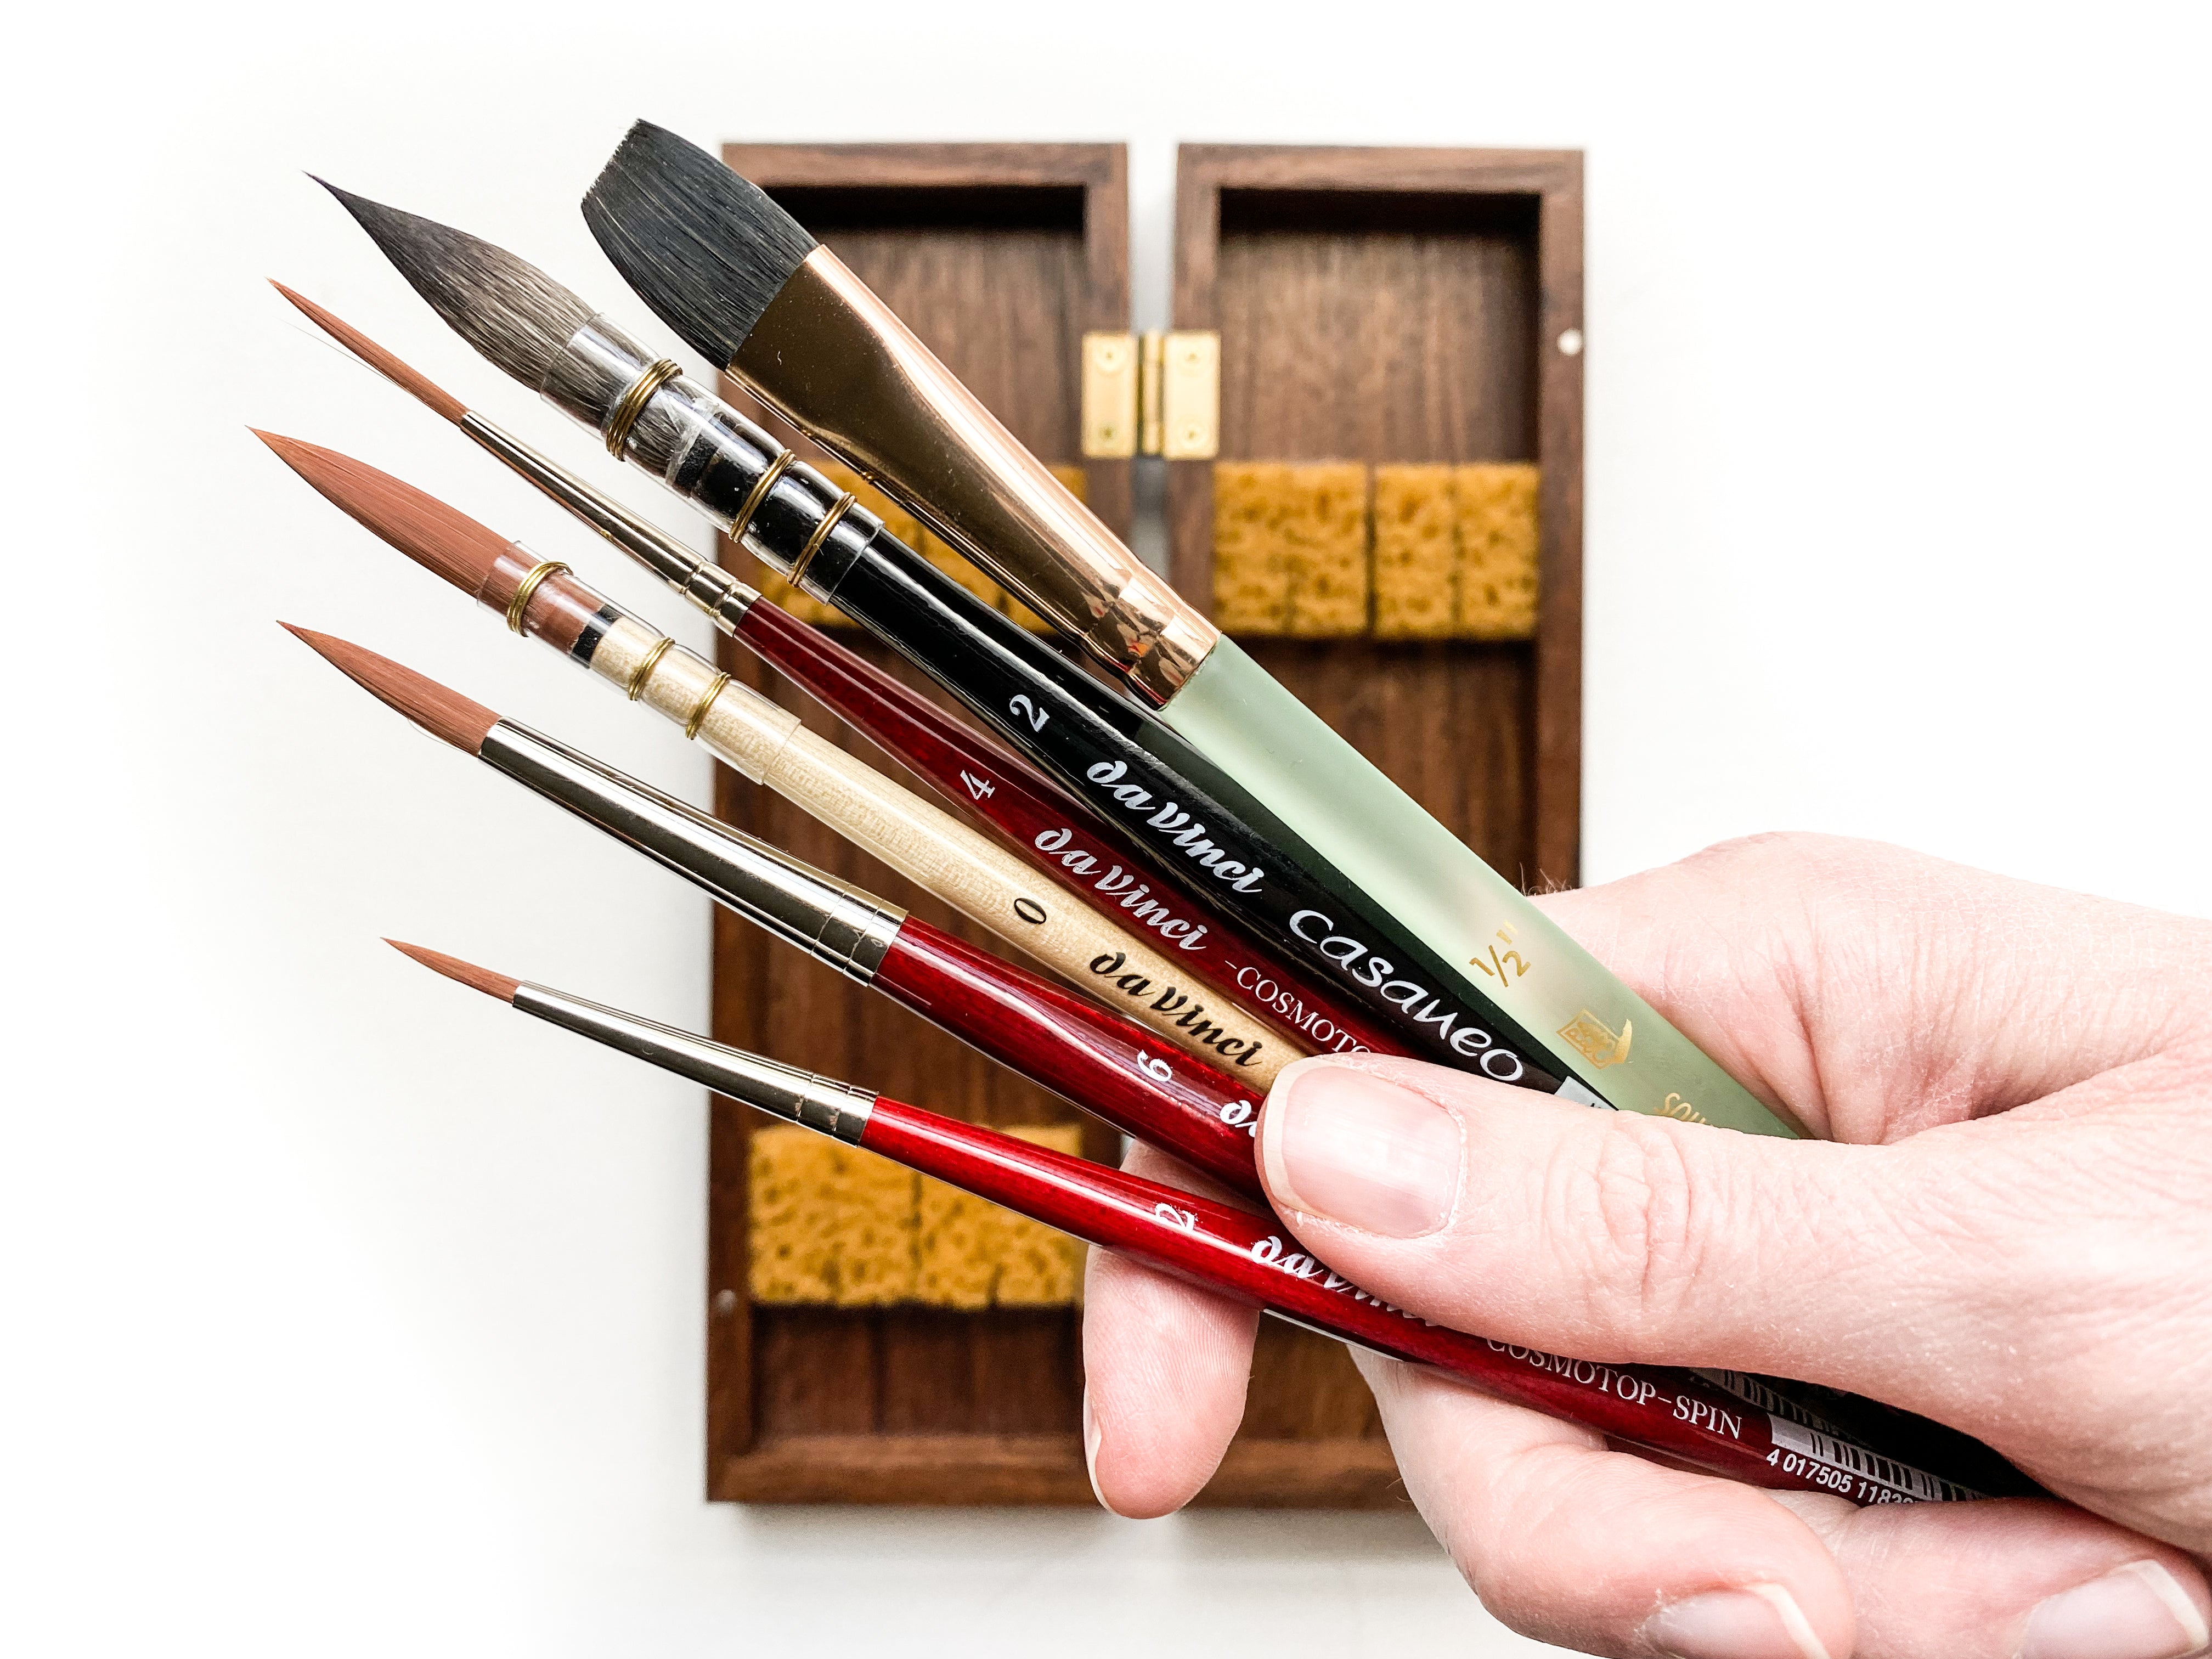 Princeton Brushes Haul - Watercolour Brushes You NEED! 